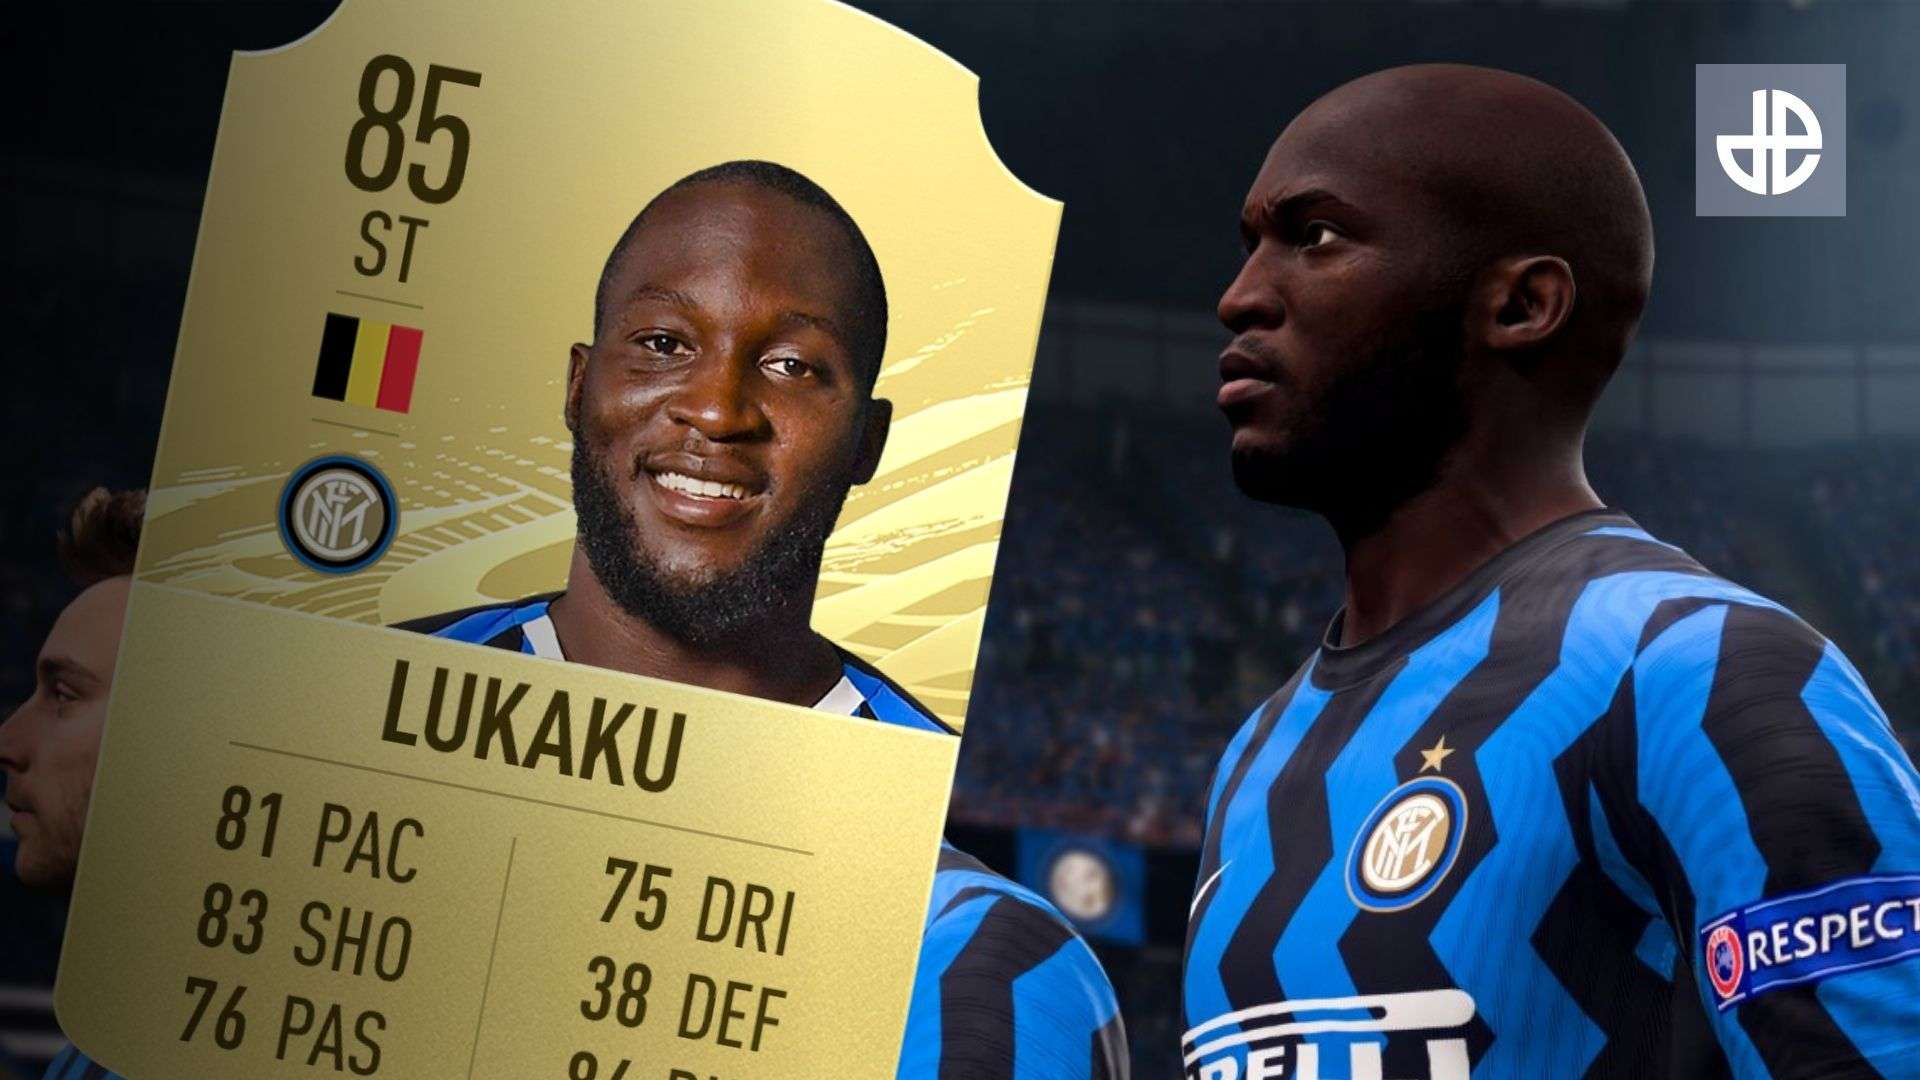 Inter Milan's Lukaku FIFA 21 card rating